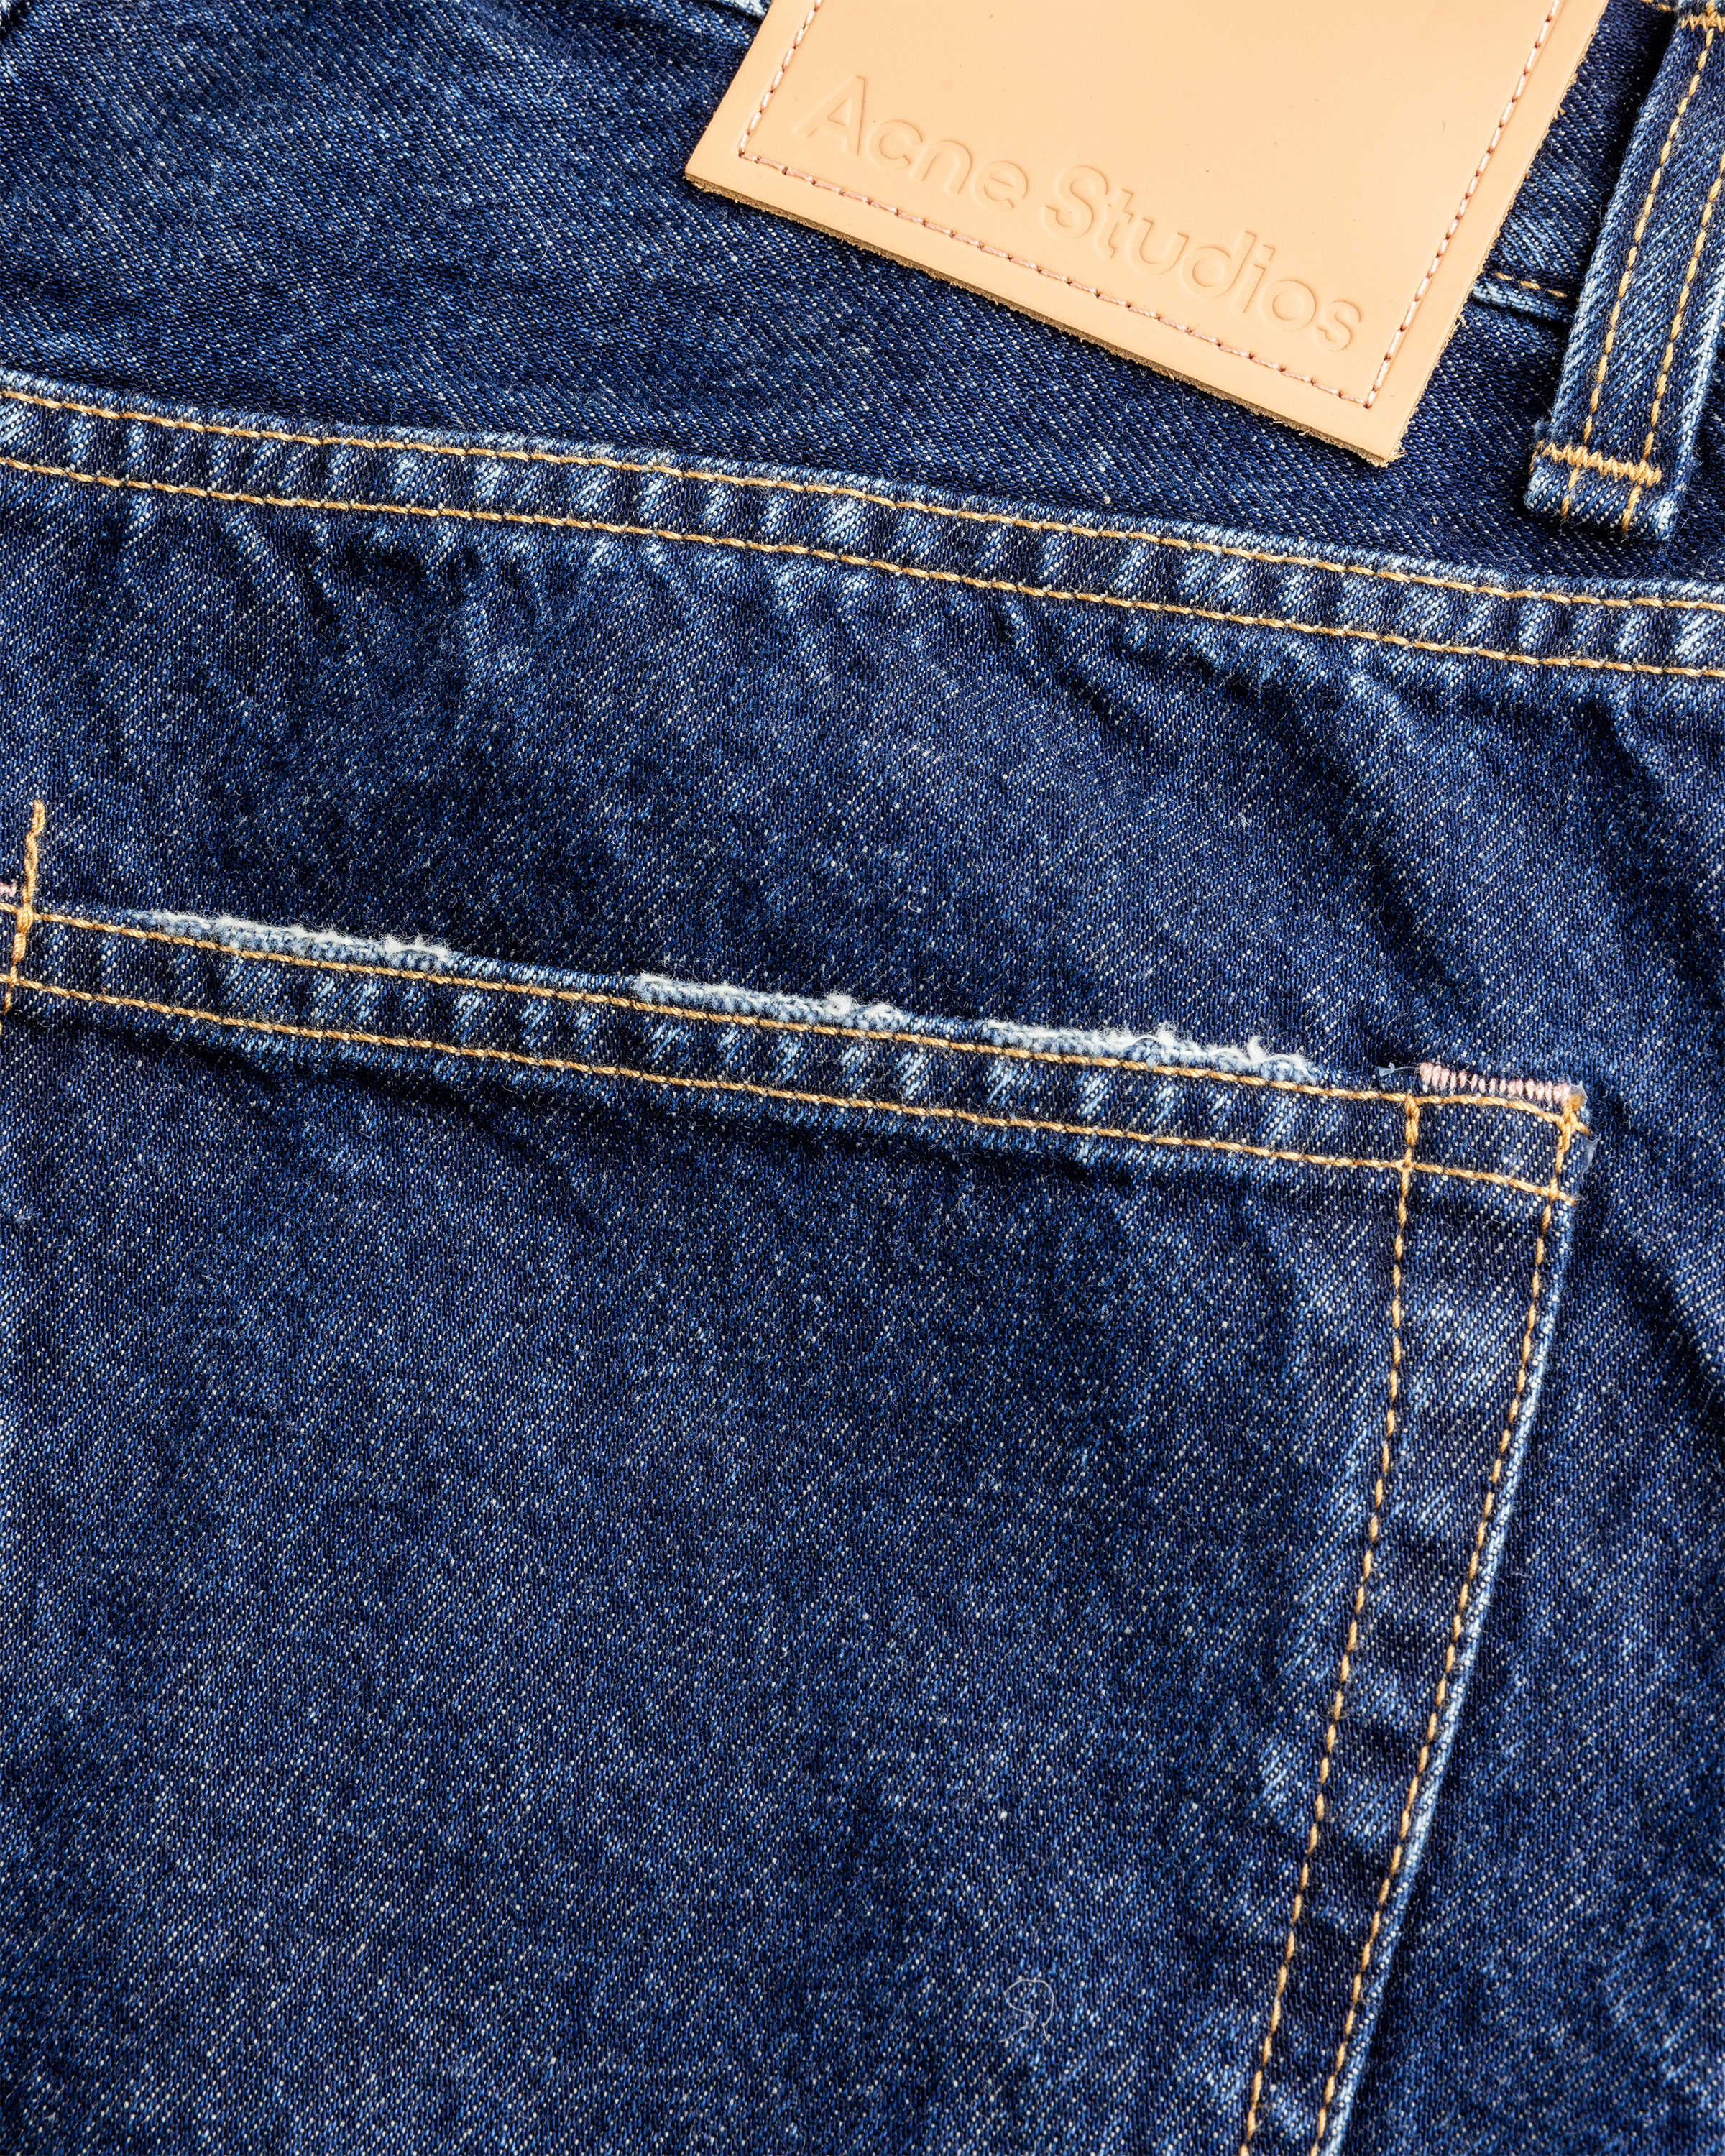 Acne Studios – Distressed Denim Shorts Mid Blue - Cargo Shorts - Blue - Image 6